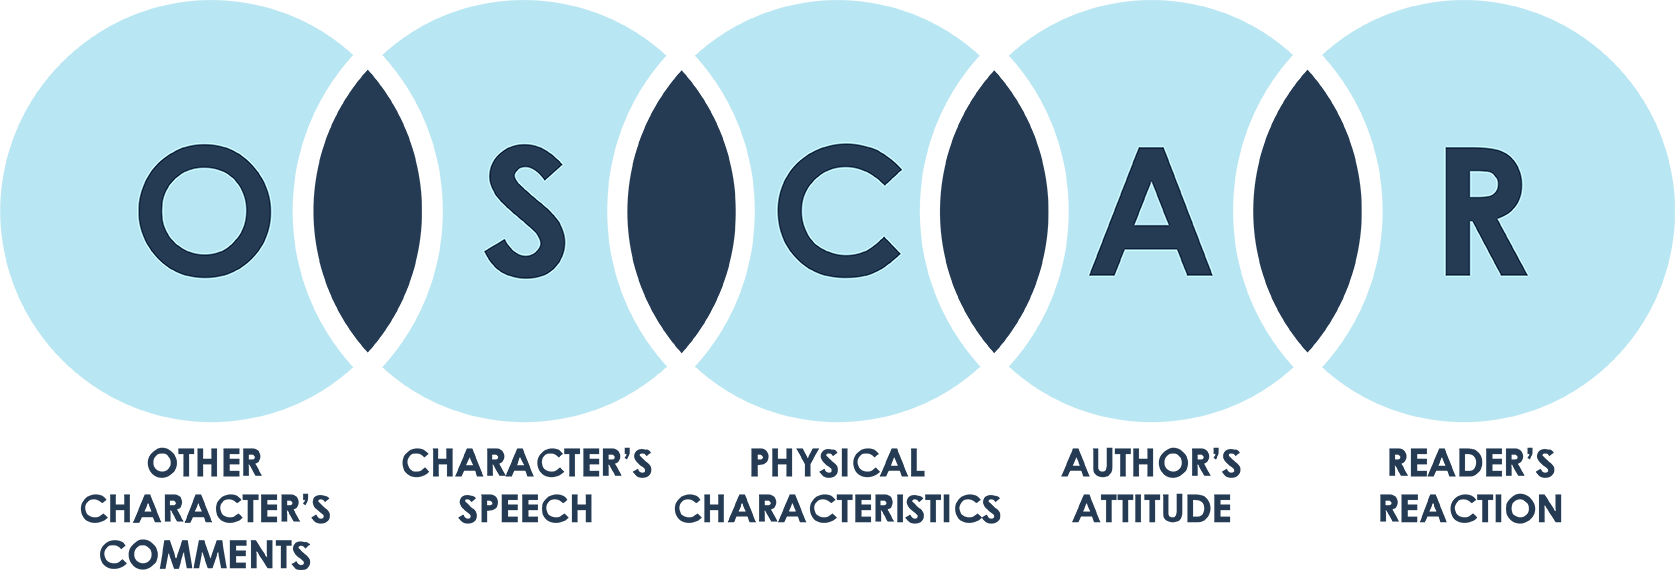 OSCAR चरित्र विश्लेषण